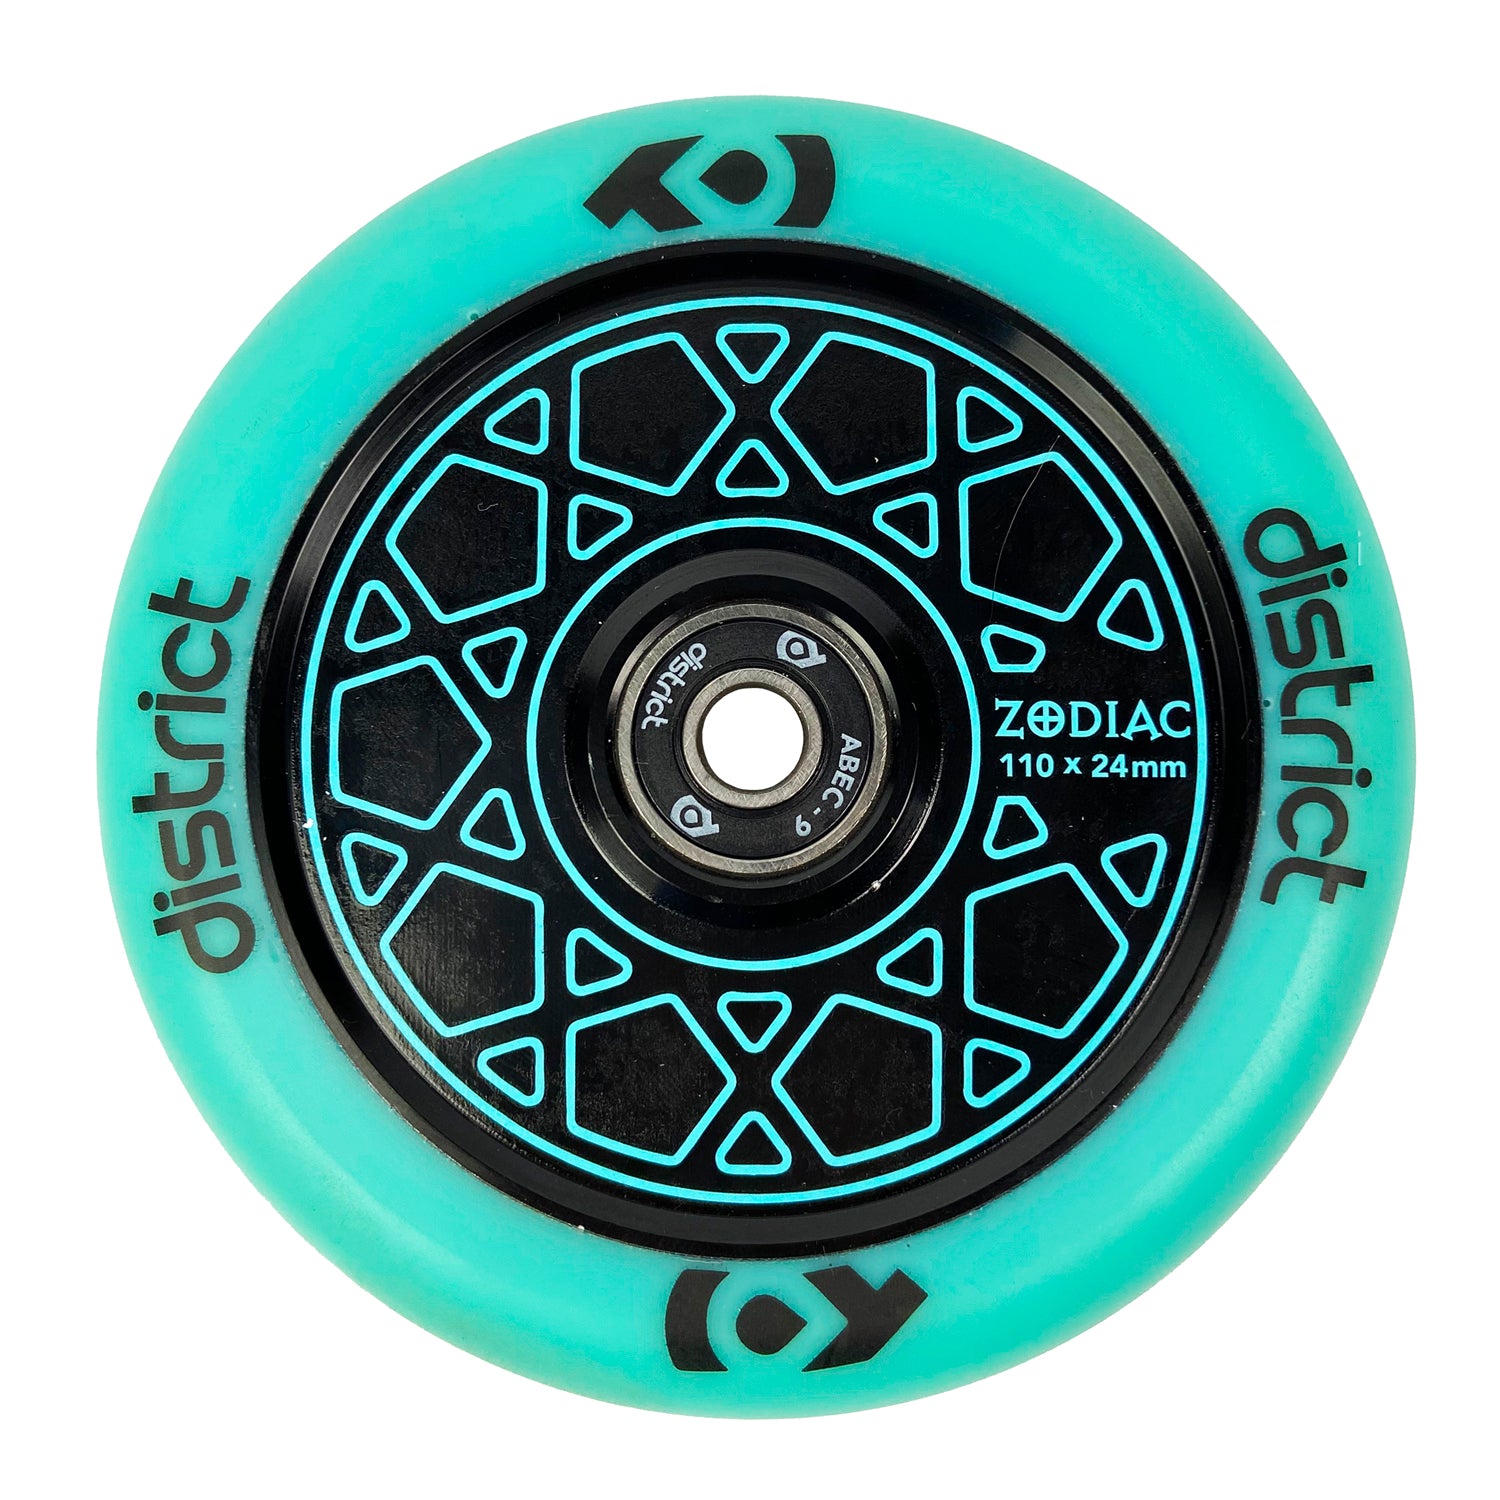 District Zodiac Wheel 110mm - Sky Blue / Black - Prime Delux Store